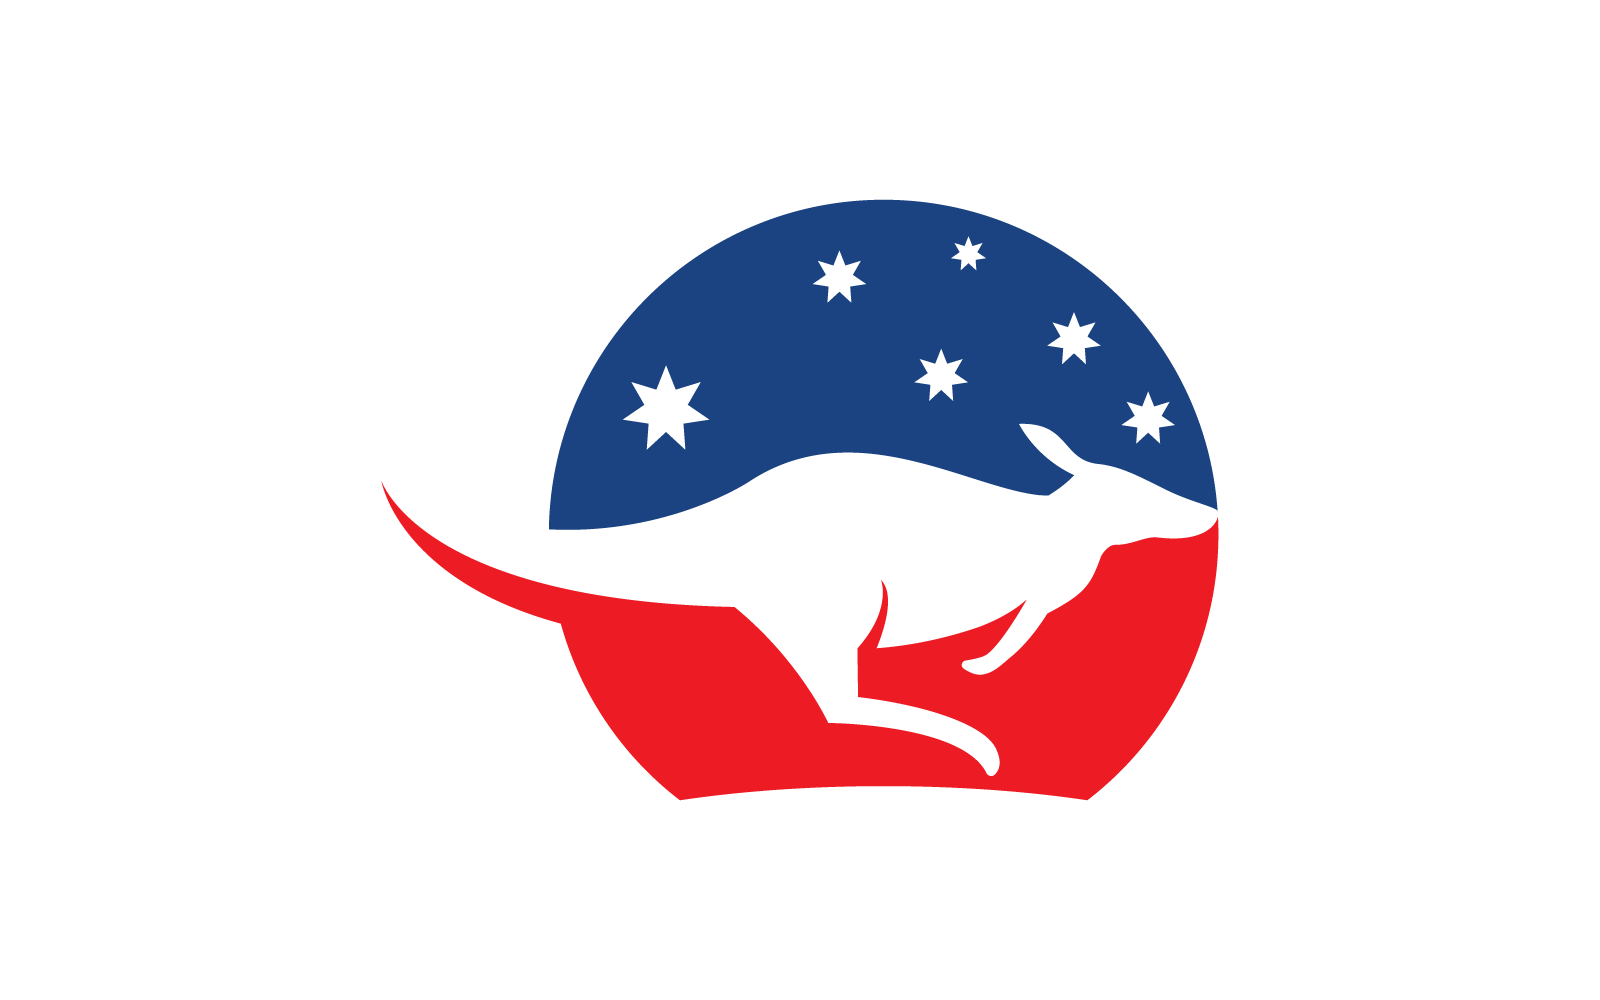 Blue and red Kangaroo illustration logo template vector design